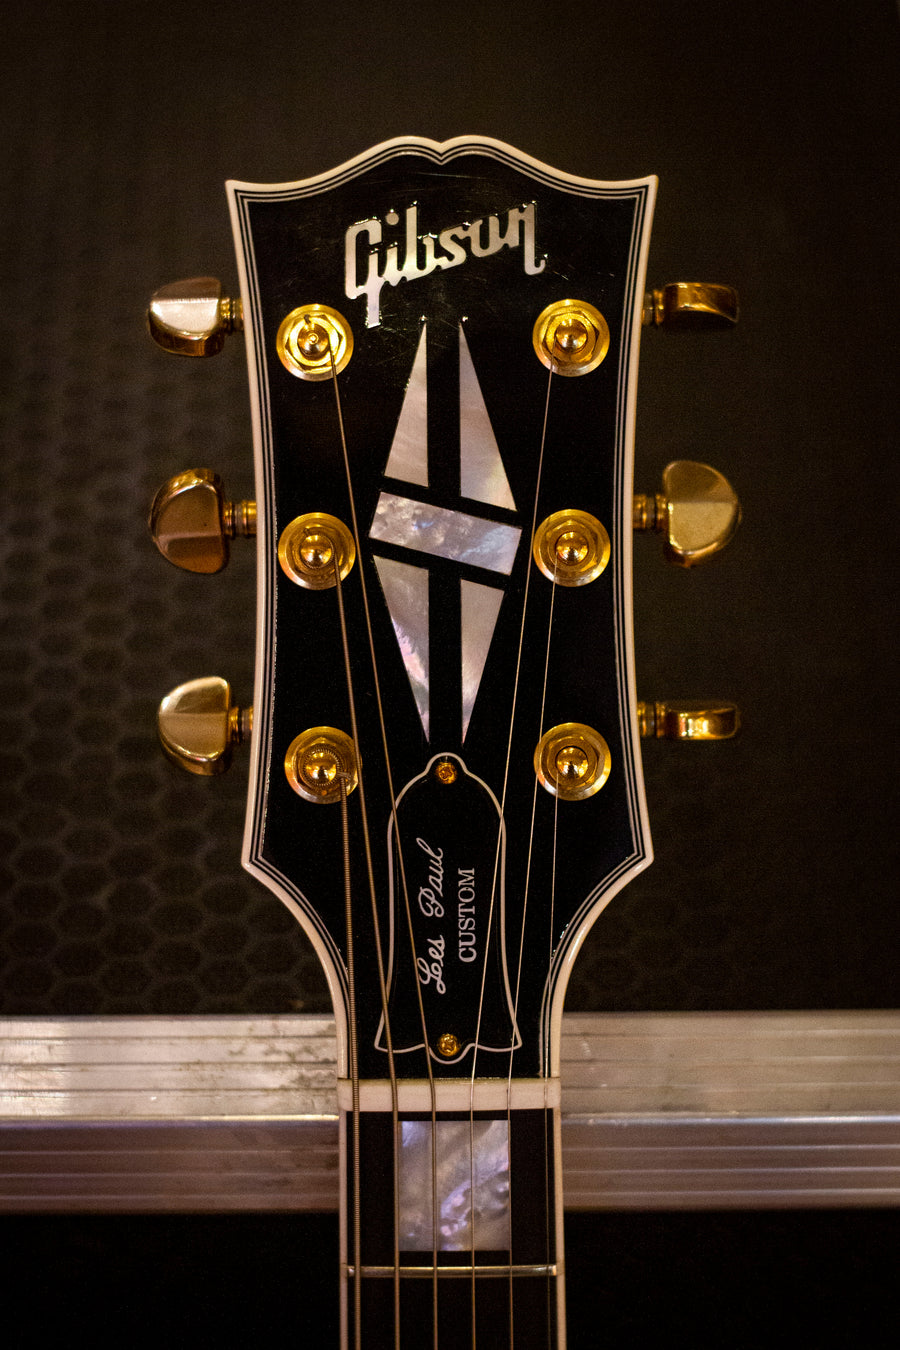 Gibson Florentine Custom Shop Les Paul Gold Top Second Hand - Regent Sounds